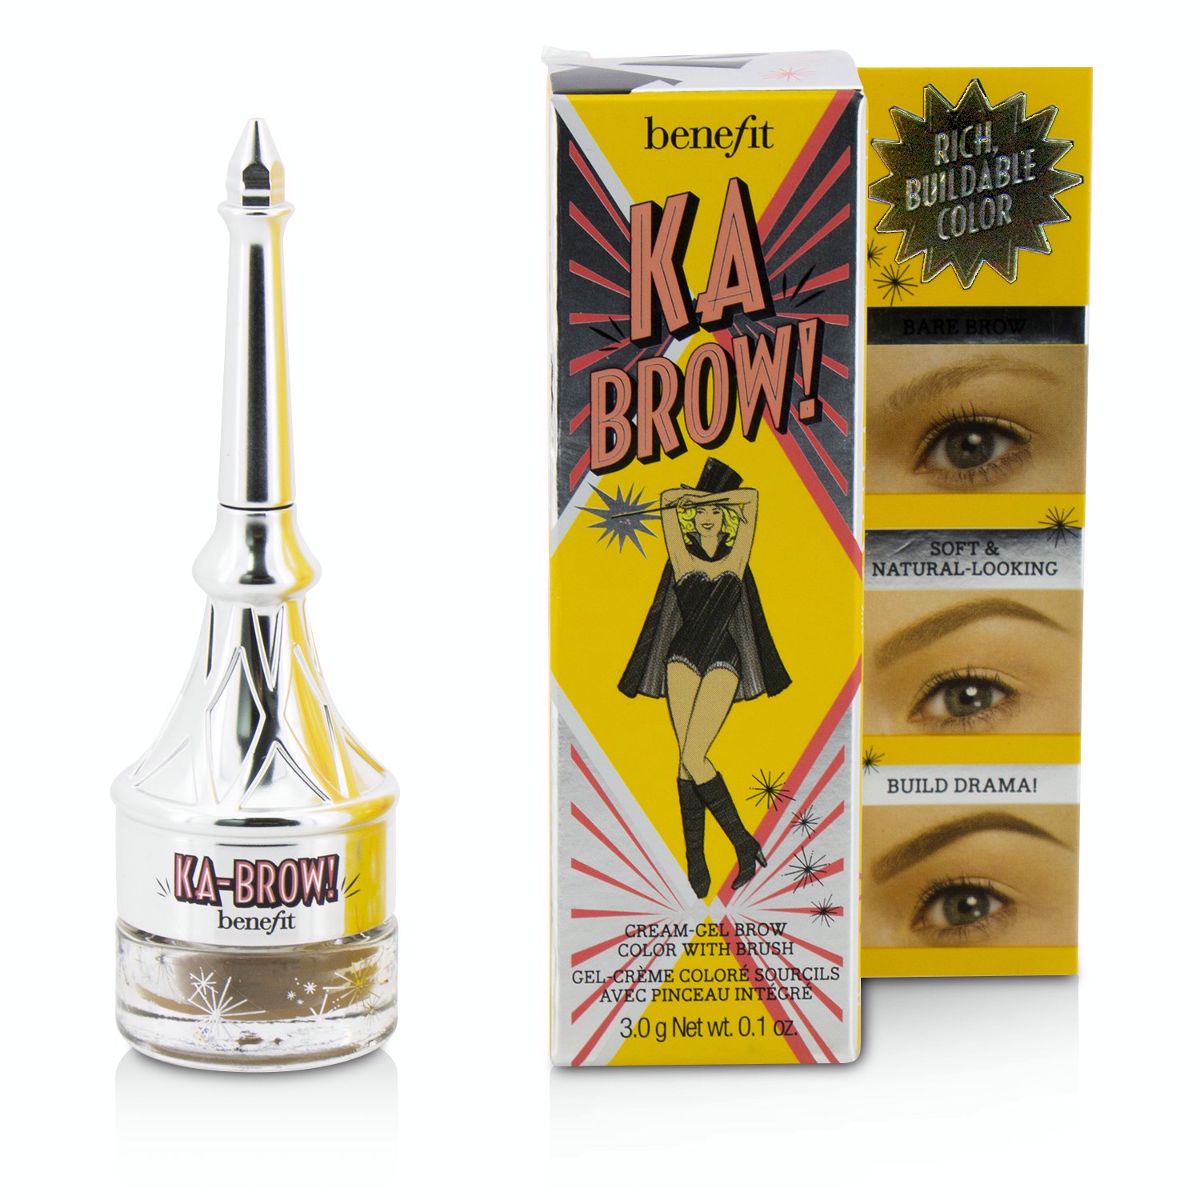 Ka Brow Cream Gel Brow Color With Brush - # 2 (Light) Benefit Image